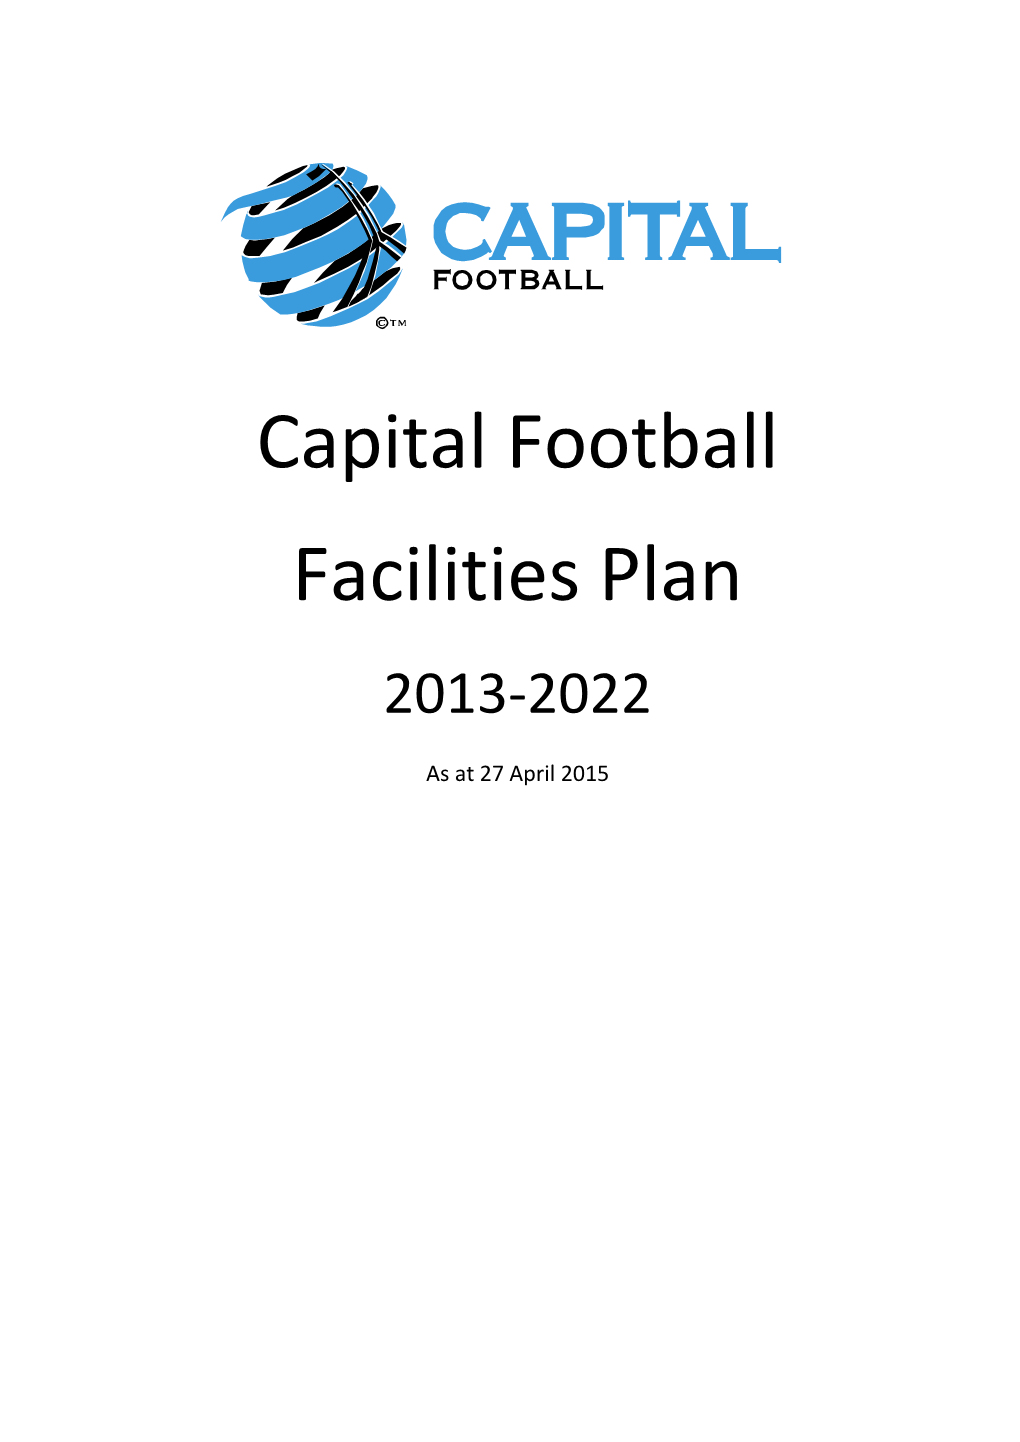 Capital Football Facilities Plan 2013-2022